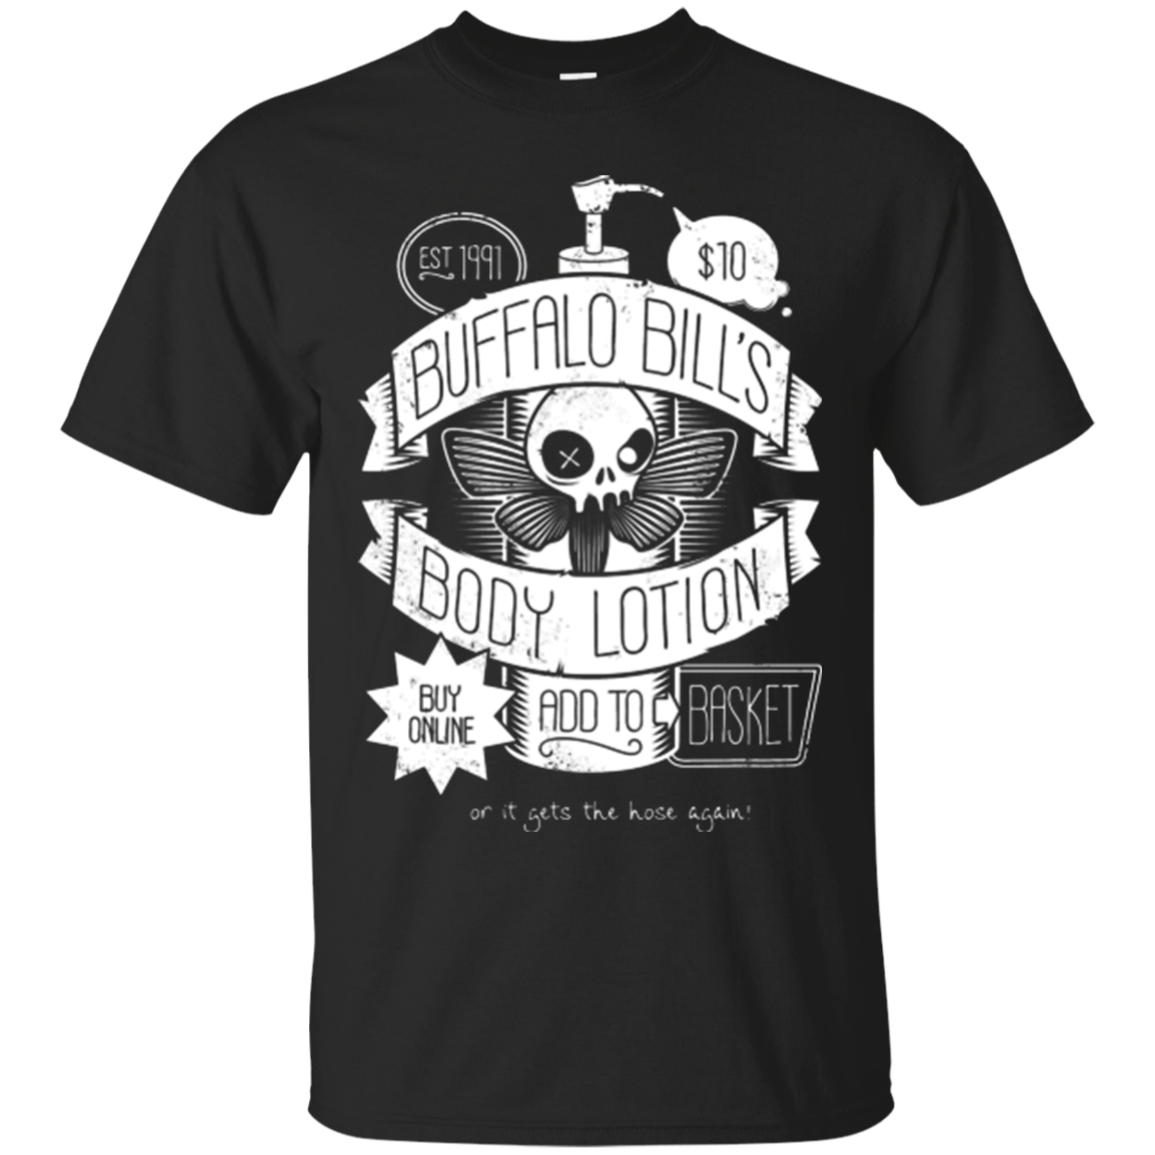 T-Shirts Black / Small Body Lotion T-Shirt